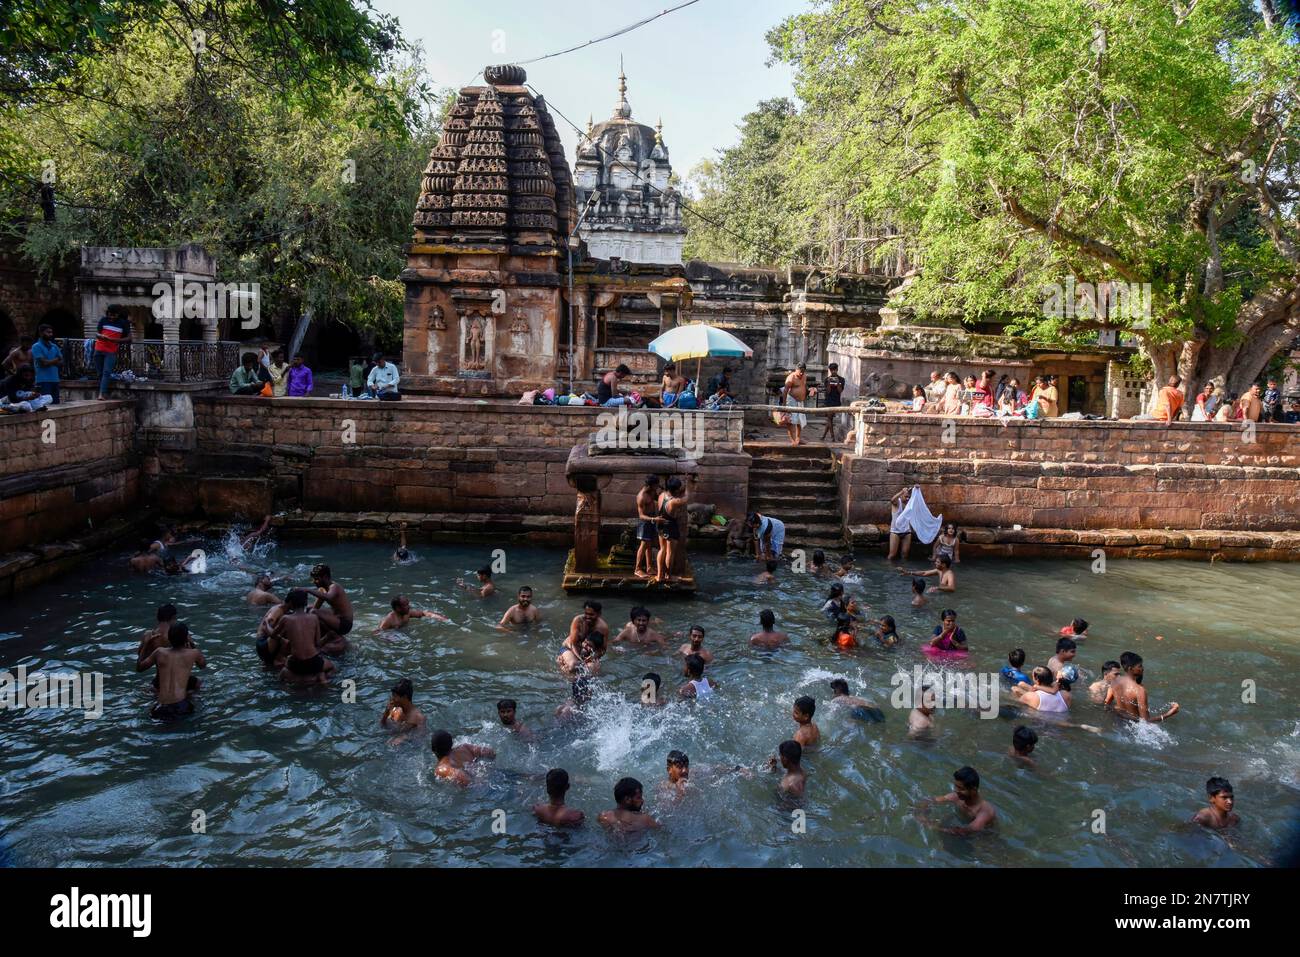 Bagalkot, Karnataka, India - Oct 26 2022: People bathing in the temple tank of Mahakuta temples built by the early Chalukya kings. Stock Photo